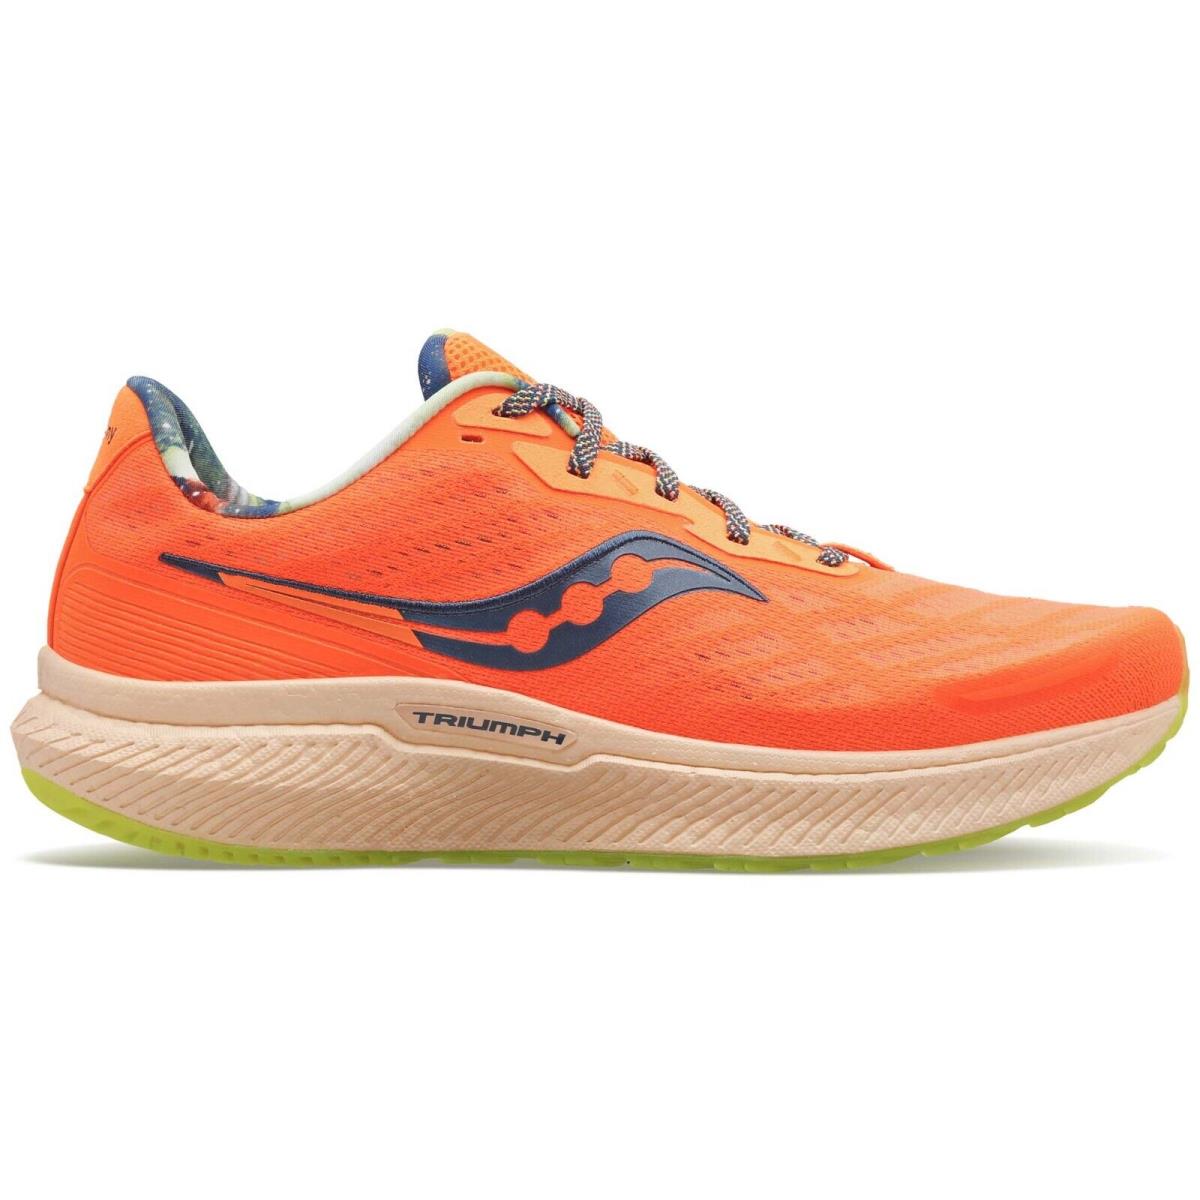 Saucony Triumph 19 S20678-45 Men`s Orange Low Top Casual Running Shoes NR4563 - Orange